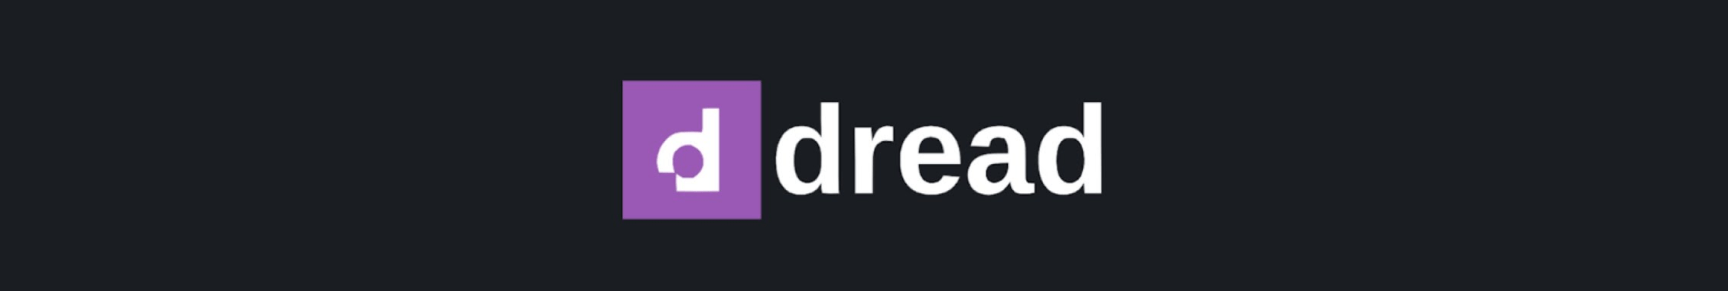 Dread Forum logo